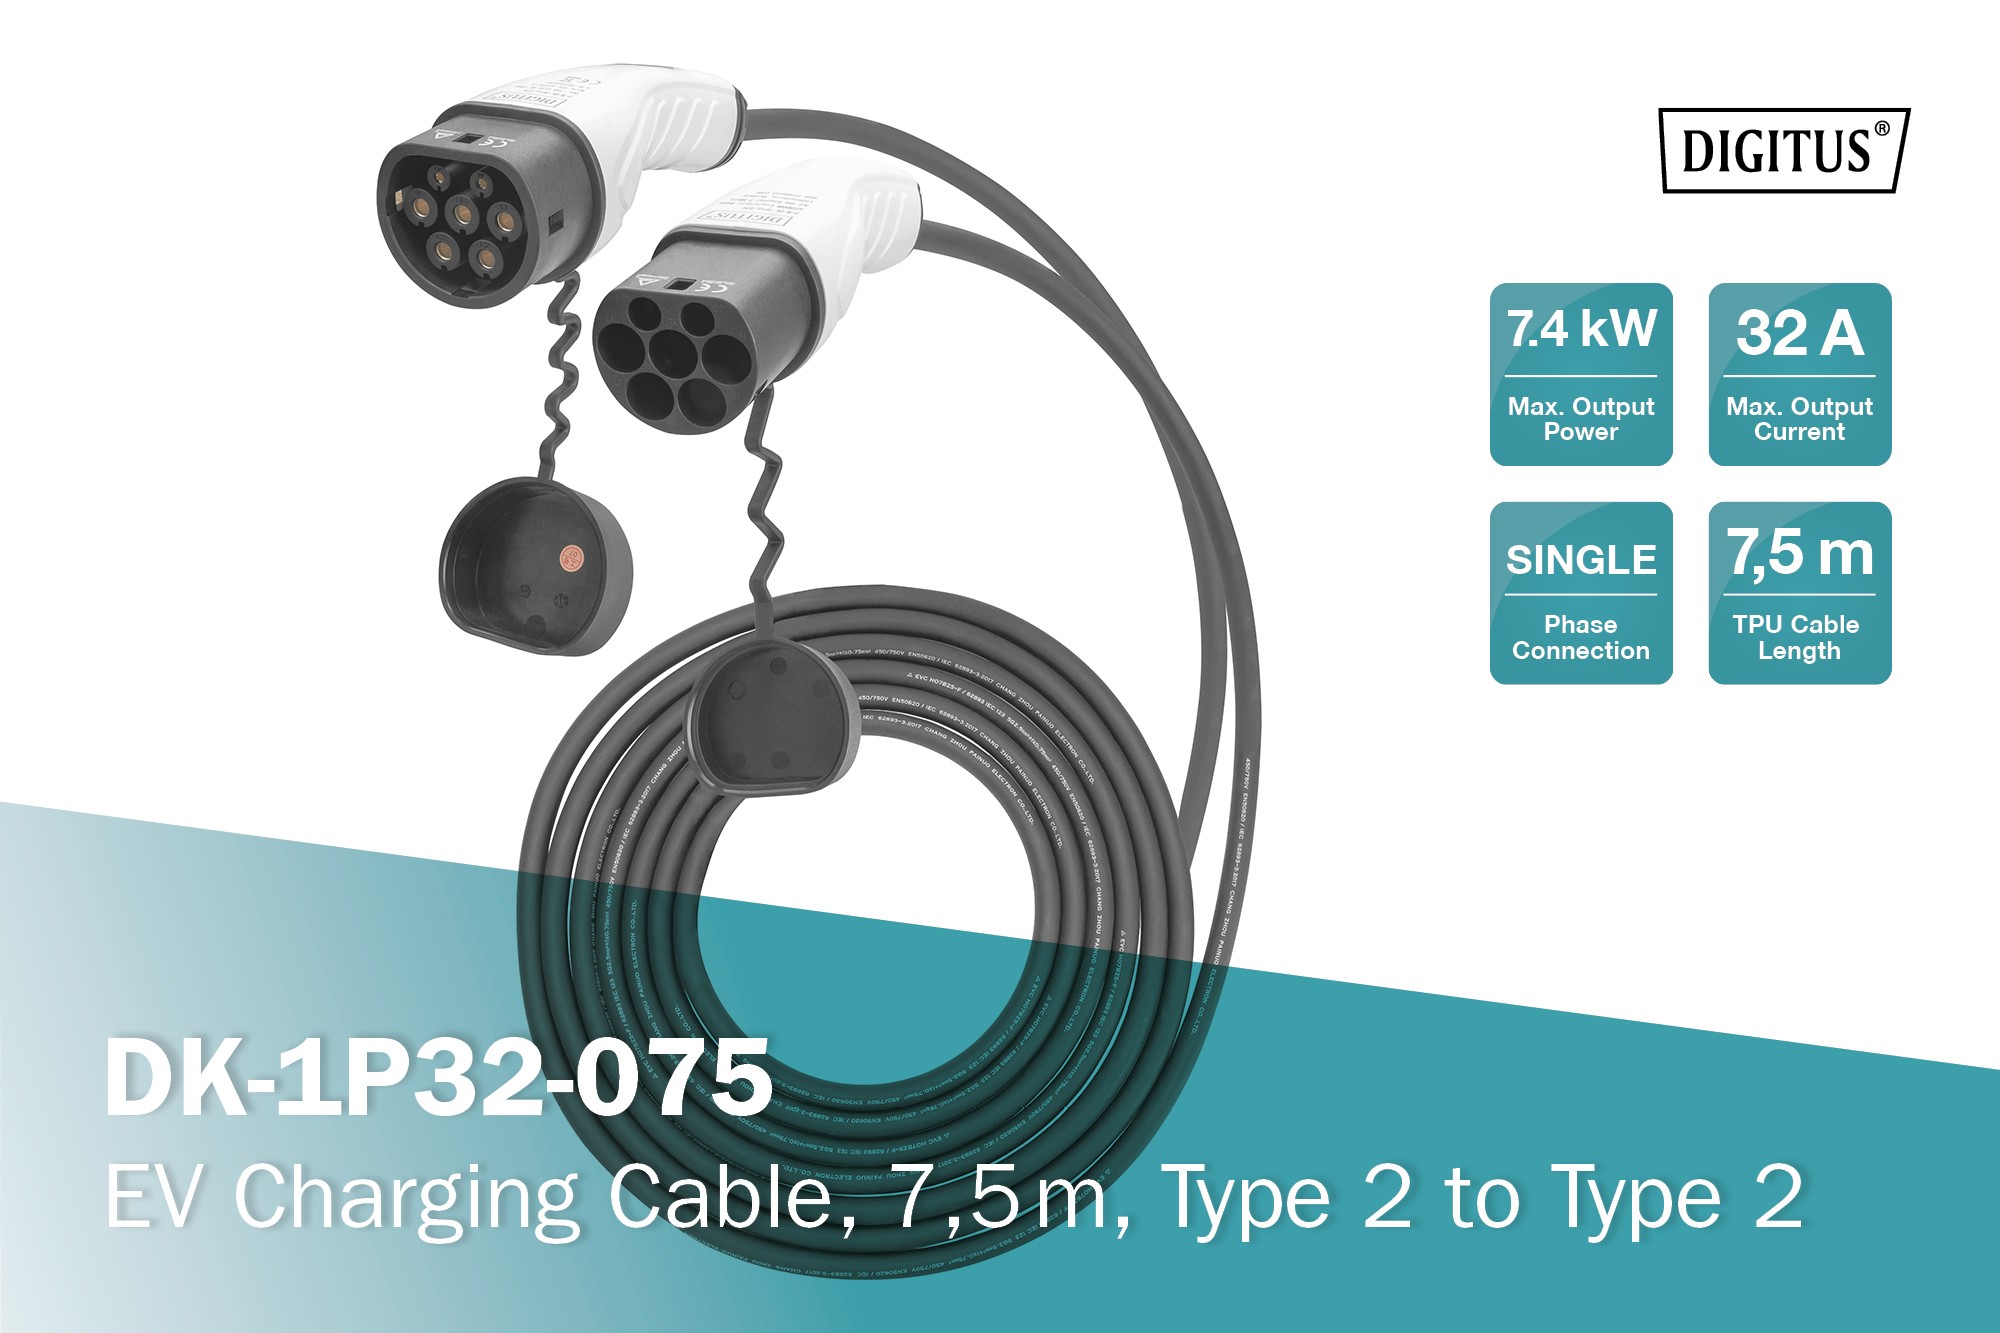 DK-1P32-075  Cable VE carga, Tipo 2 Mennekes 32A Monofasico 7,4kW  7,5 metros Liso Negro-Blanco Digitus